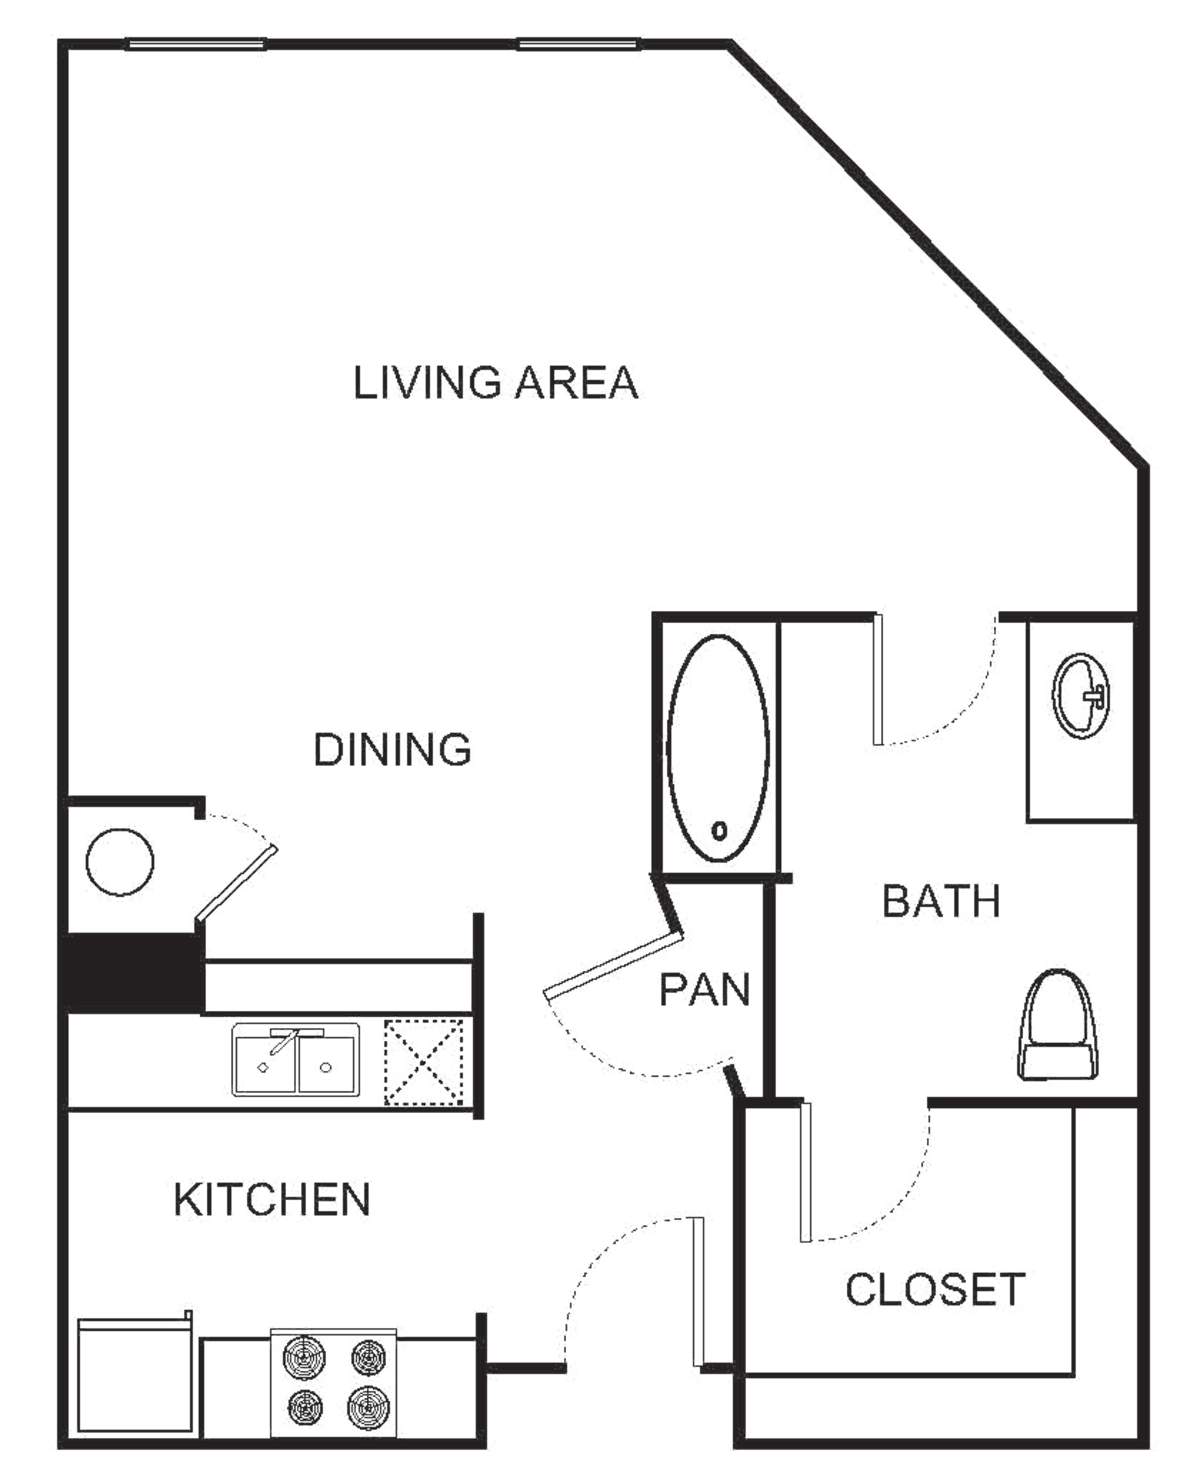 Floorplan diagram for S7-A Studio, showing Studio